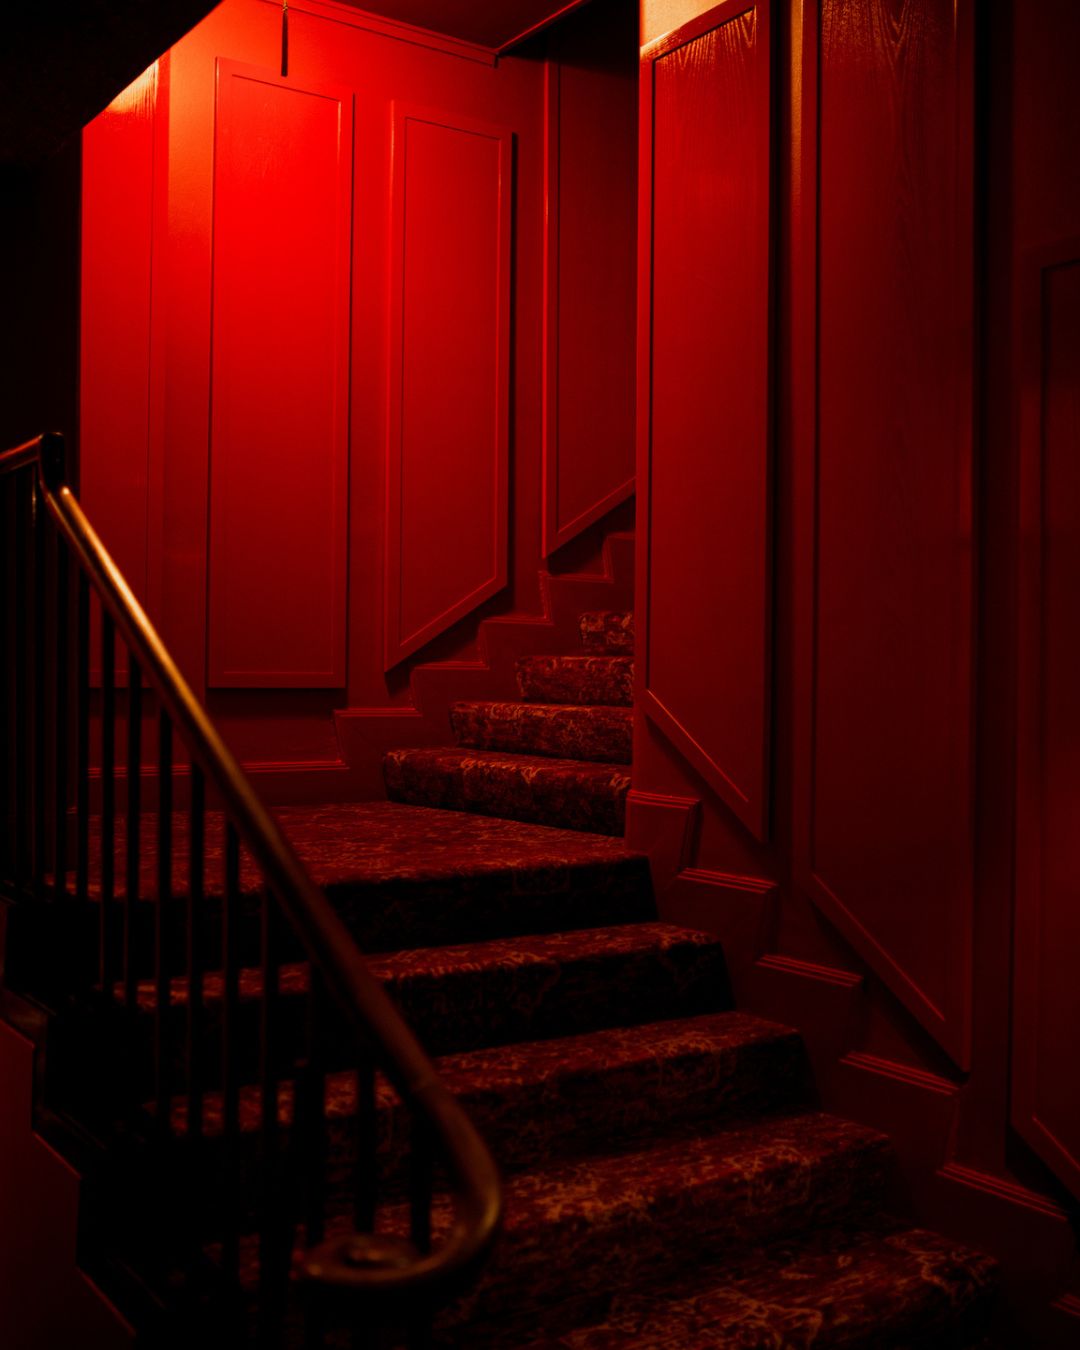 The Red Room restaurant aesthetic